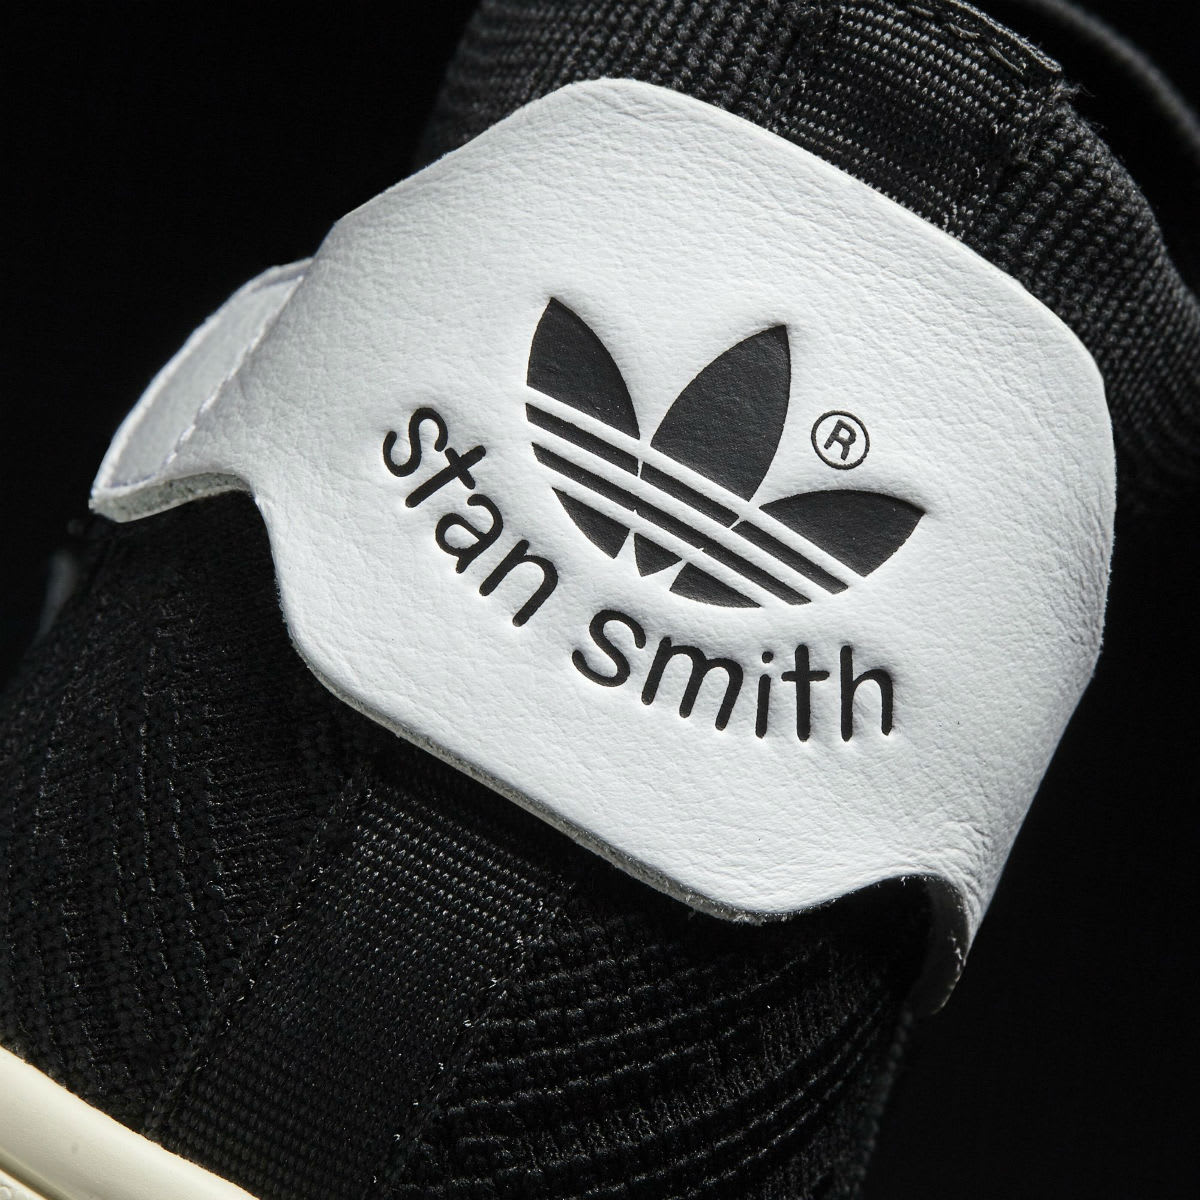 Adidas Stan Smith Sock Primeknit Sock Black Heel